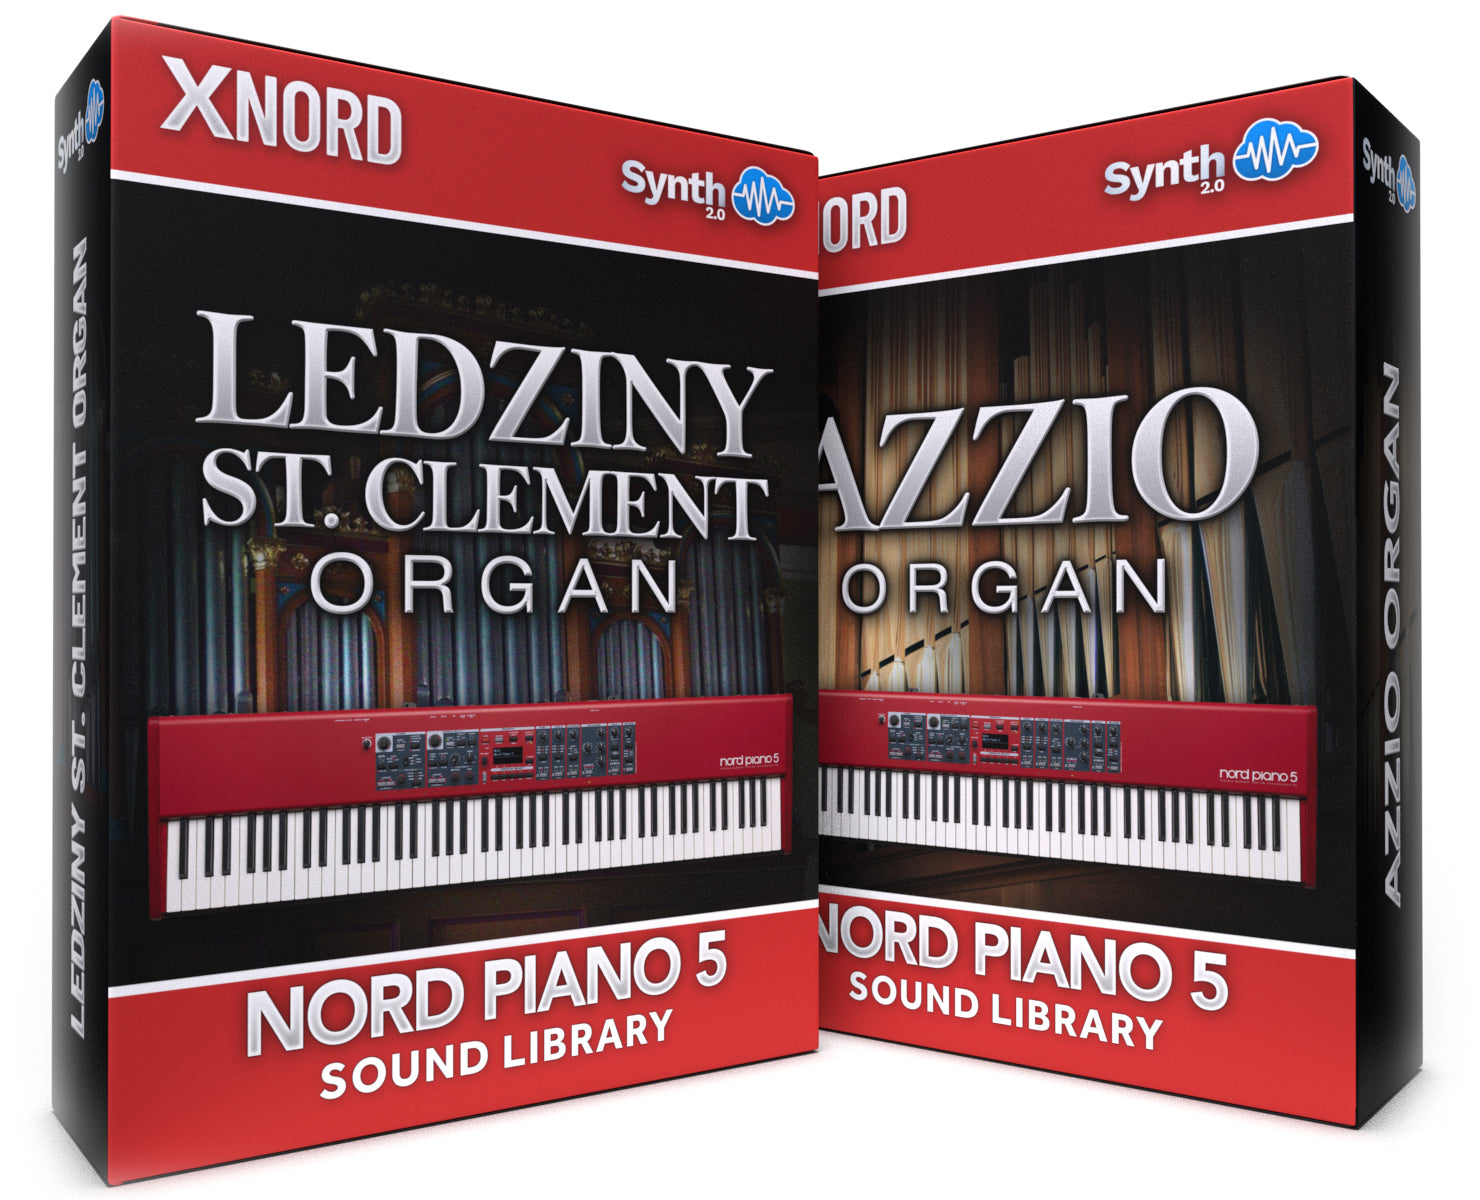 RCL008 - ( Bundle ) - Ledziny, St. Clement Organ + Azzio Organ - Nord Piano 5